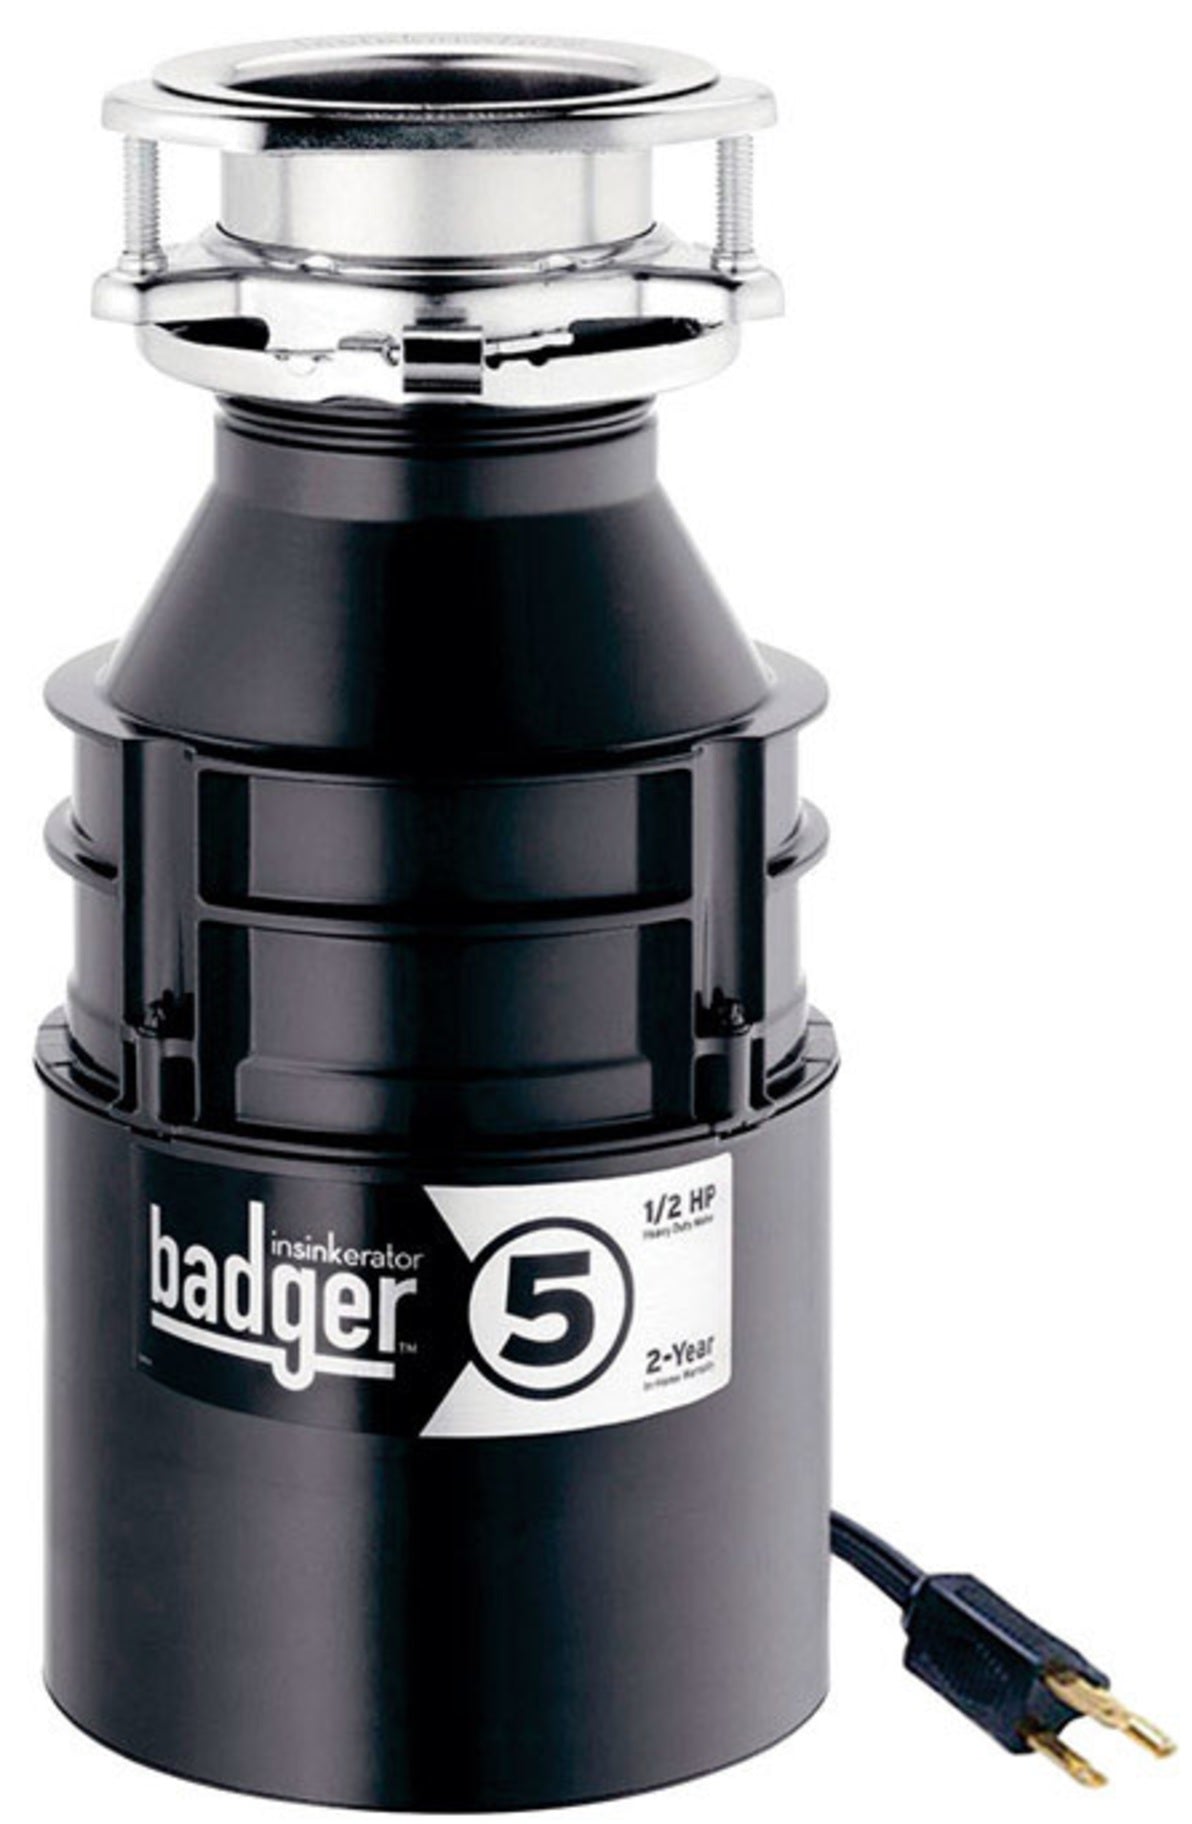 InSinkErator BADGER5WCORD Badger Garbage Disposal, 1/2 HP